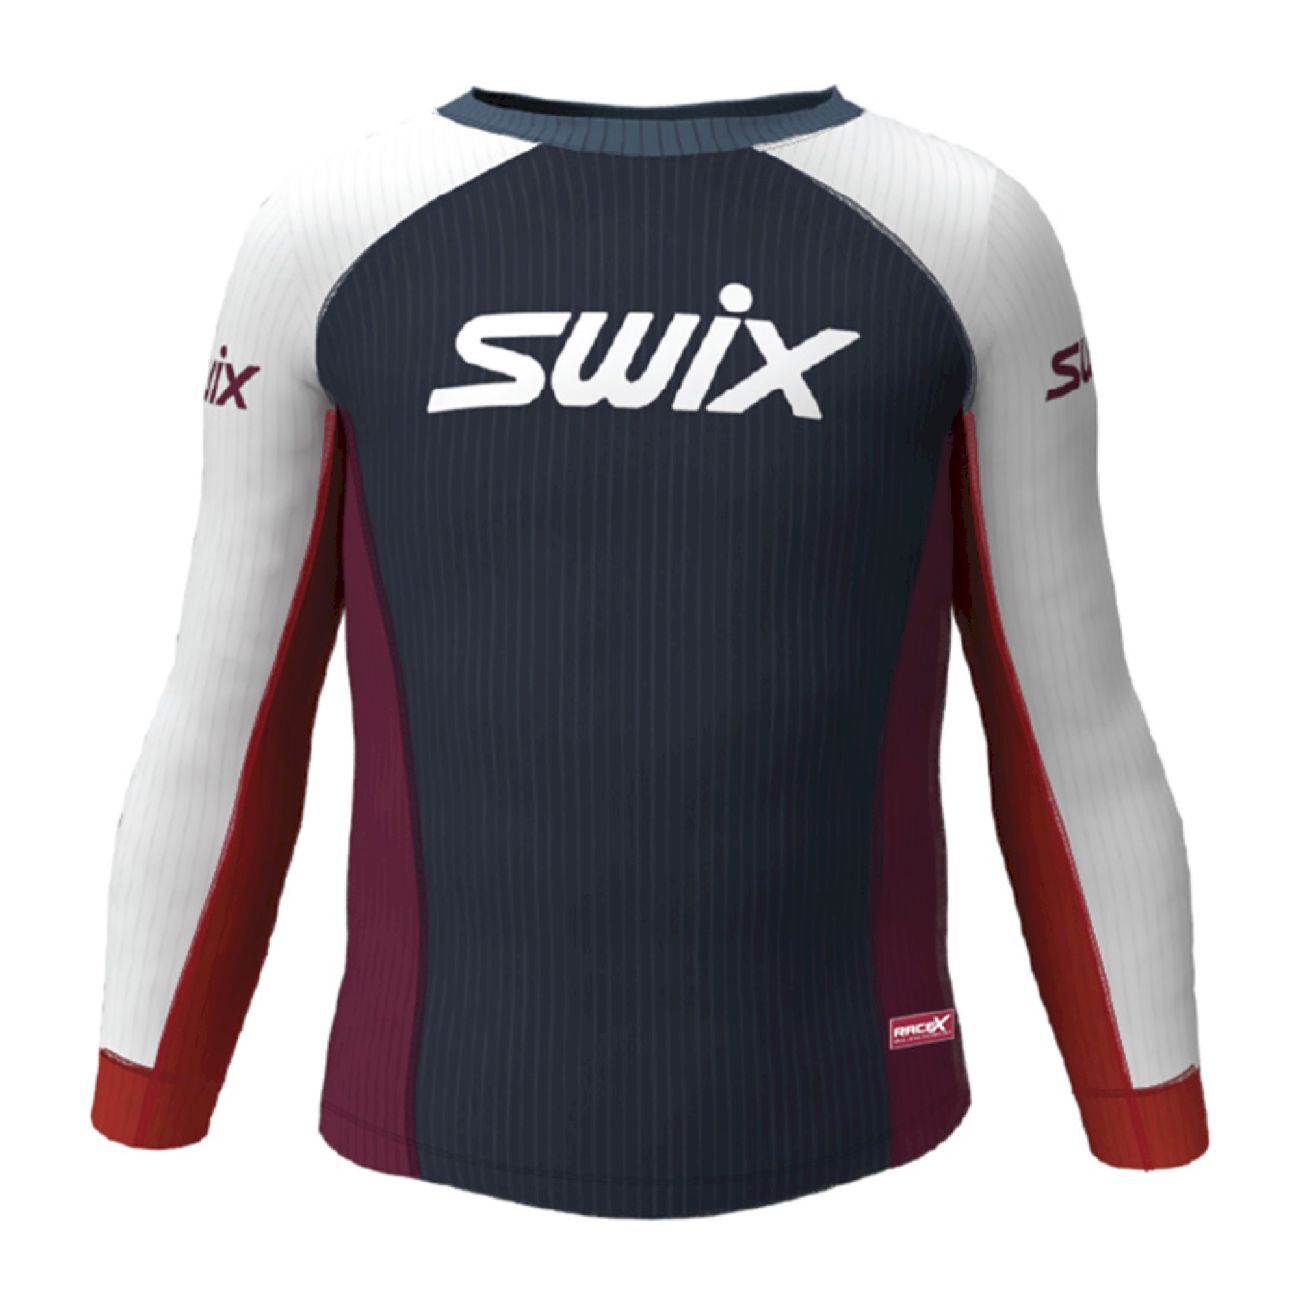 Swix Racex Bodywear Junior - Camiseta técnica - Niños